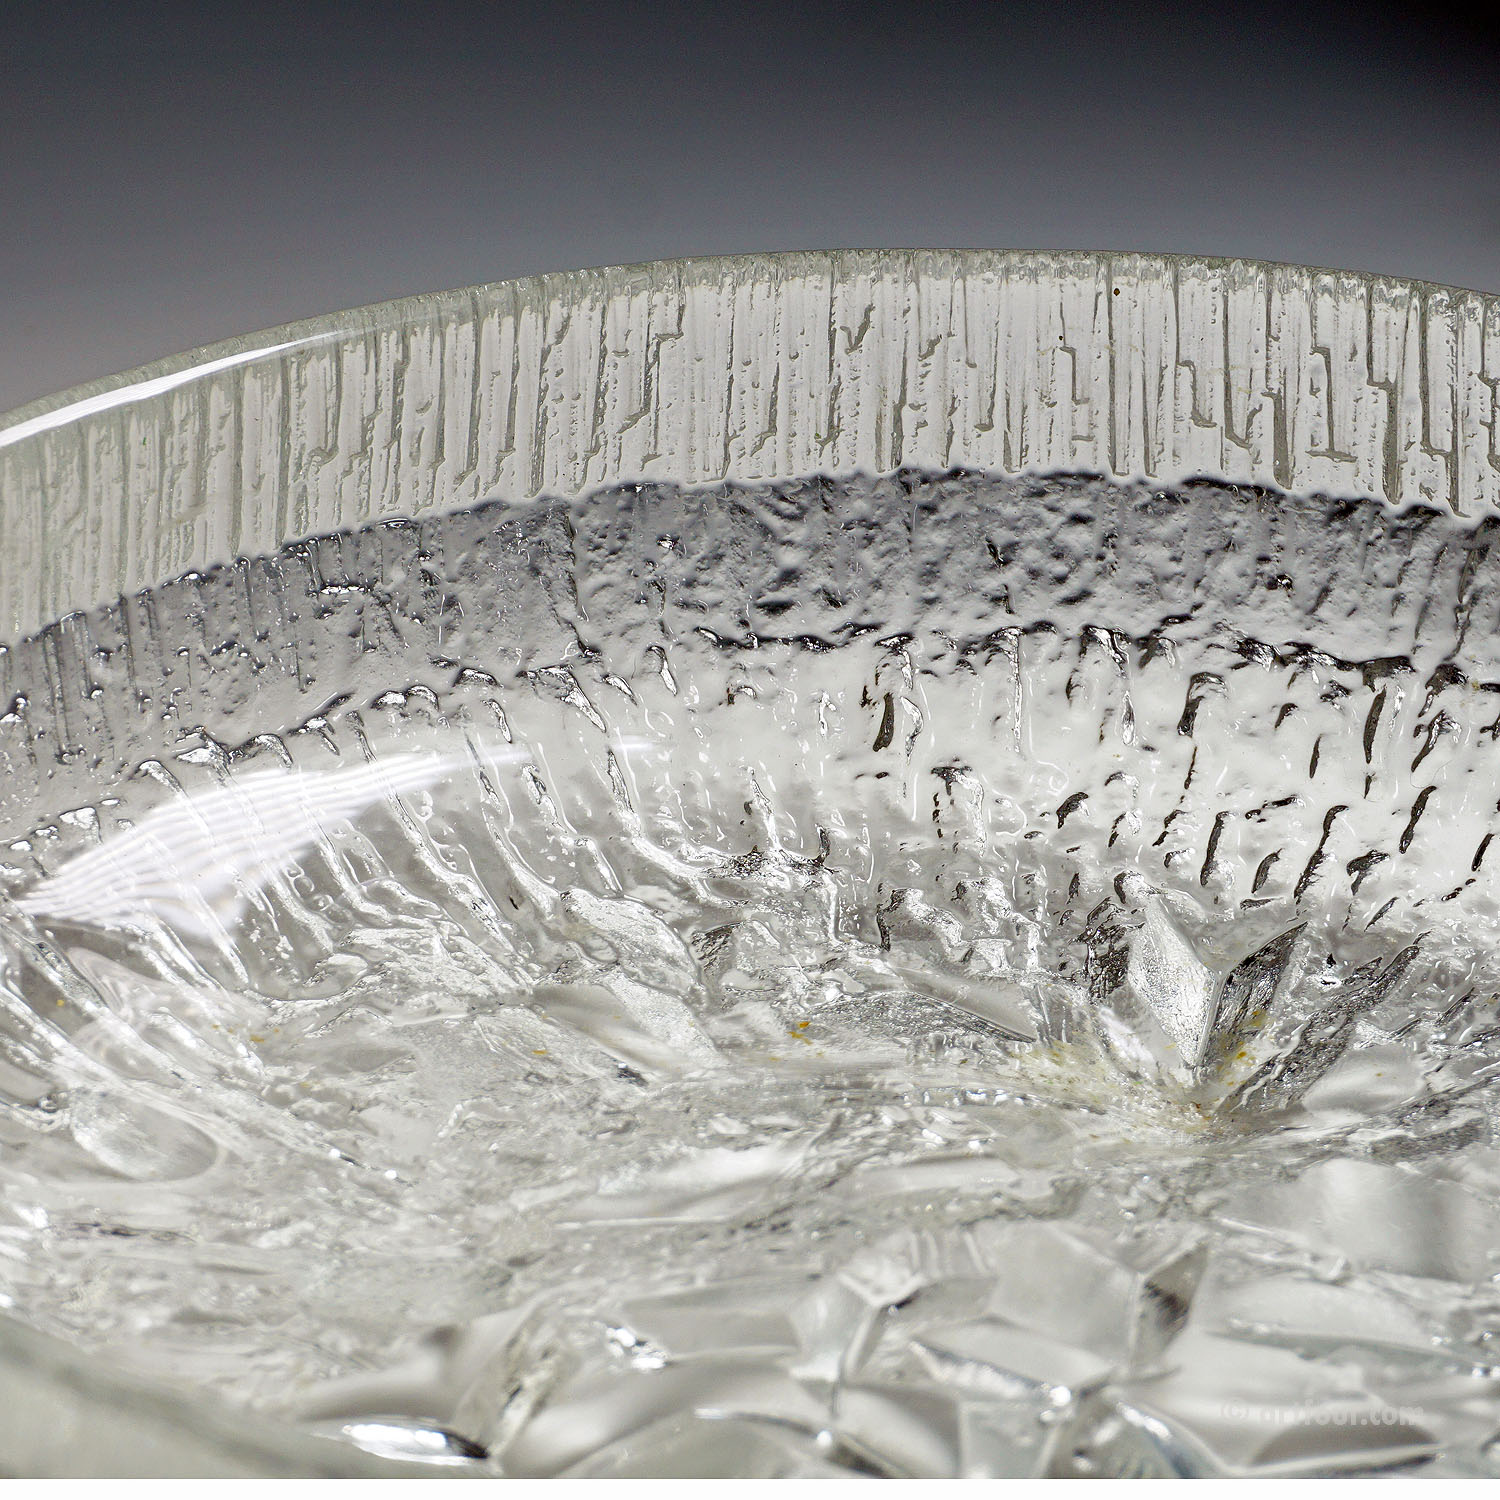 Ice glass Bowl 'Lunaria' by Tapio Wirkkala for Iittala 1972